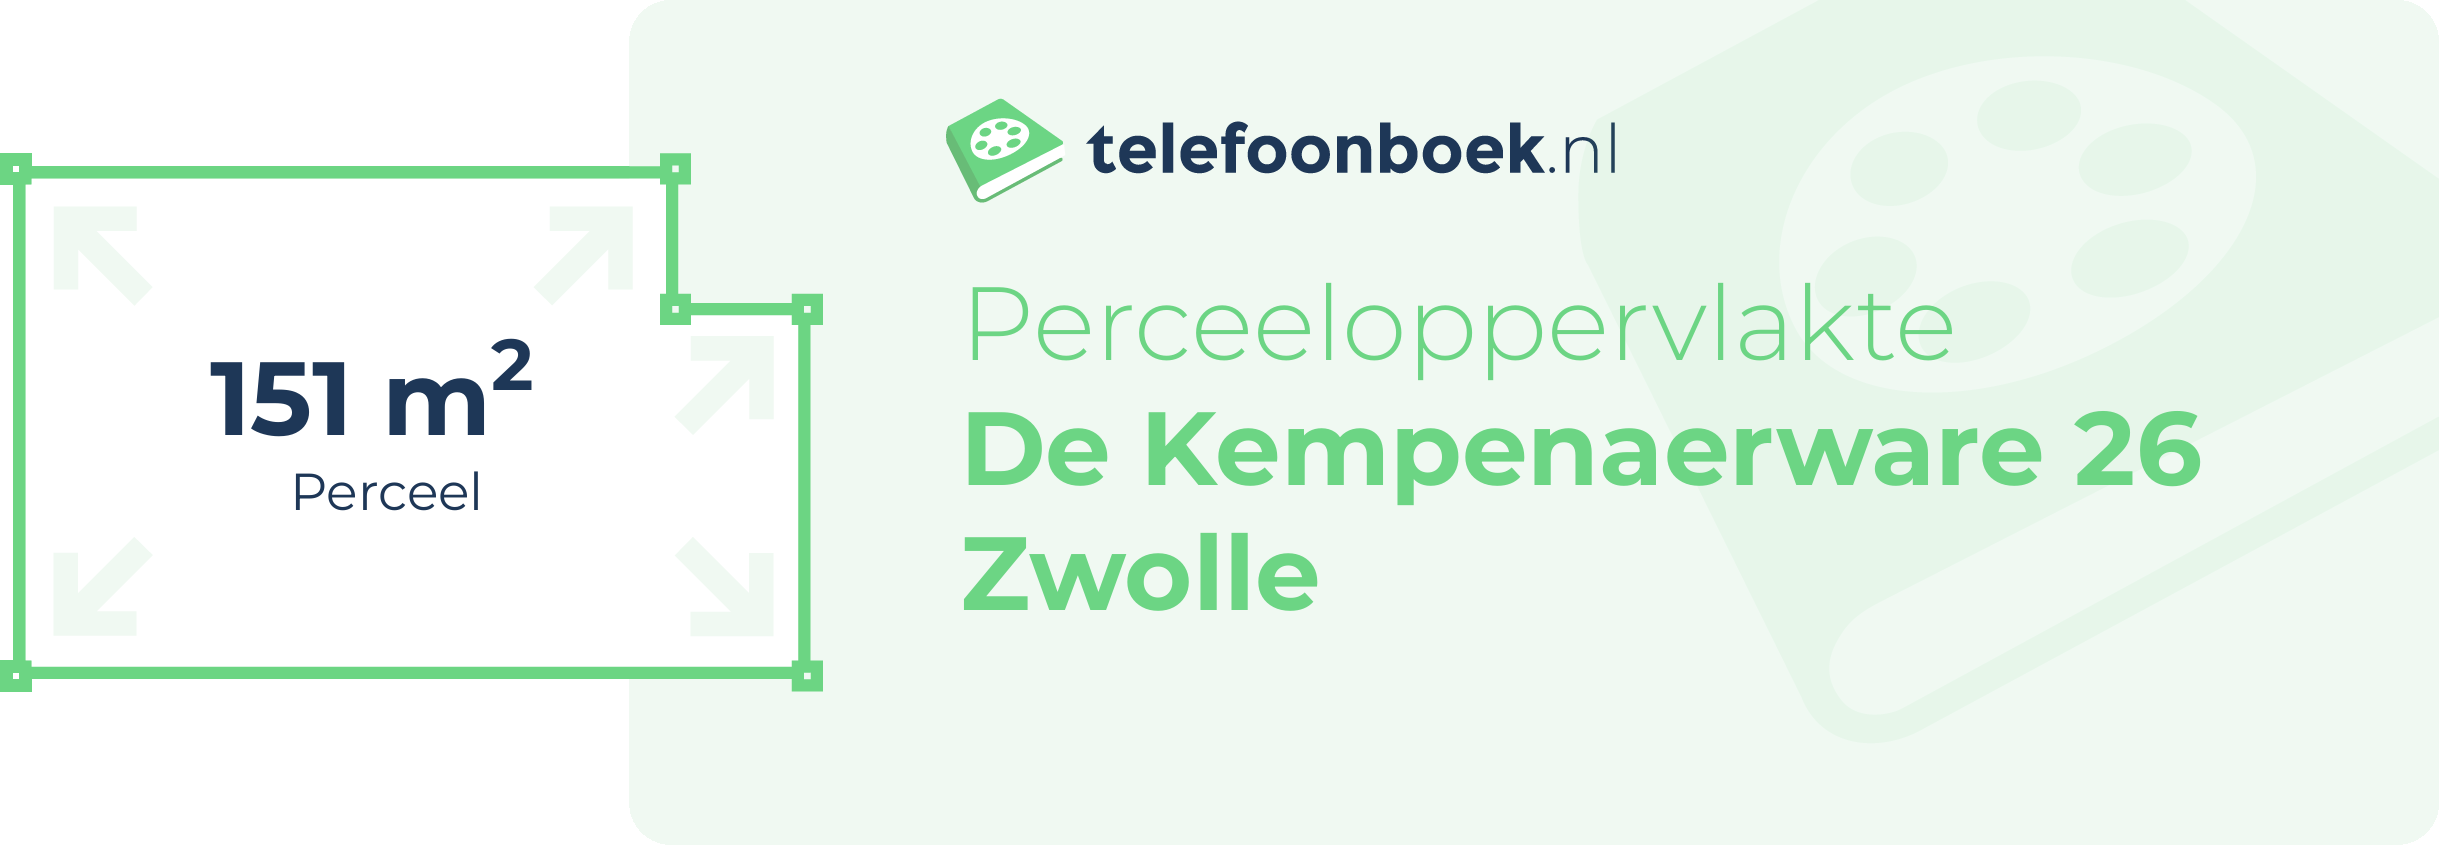 Perceeloppervlakte De Kempenaerware 26 Zwolle